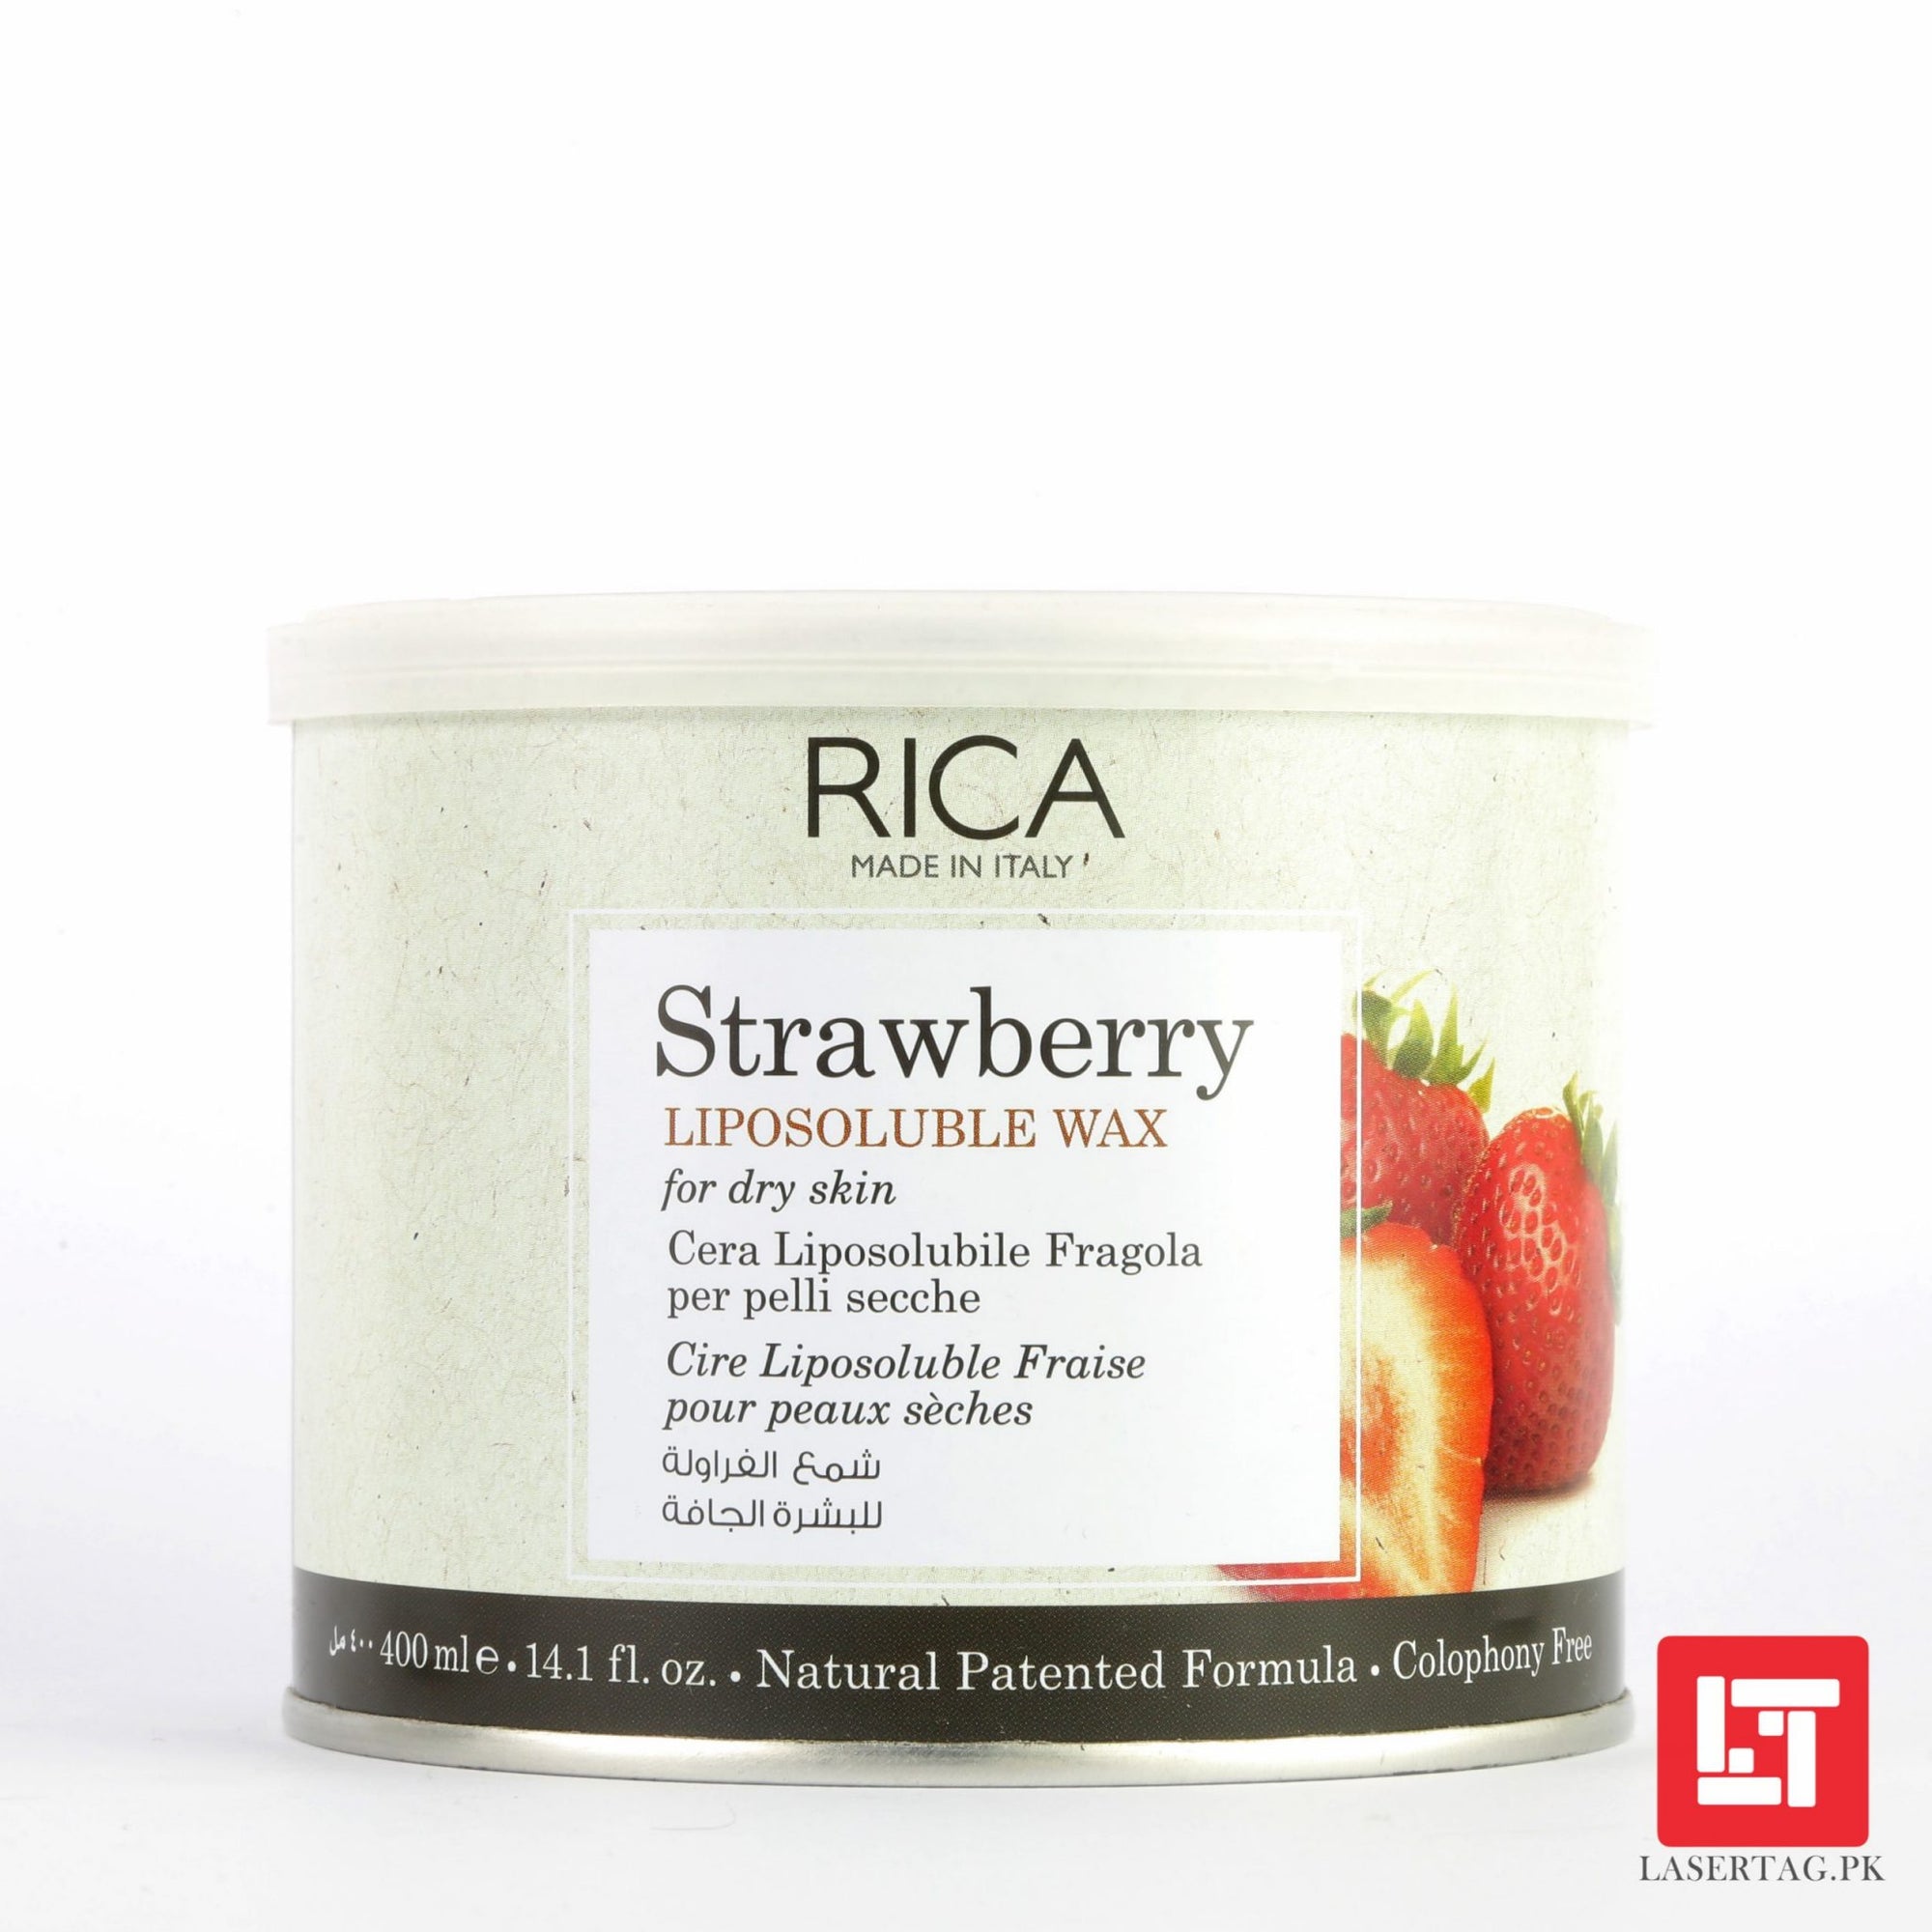 RICA Liposoluble Wax For Sensitive Skin Strawberry 400ml freeshipping - lasertag.pk